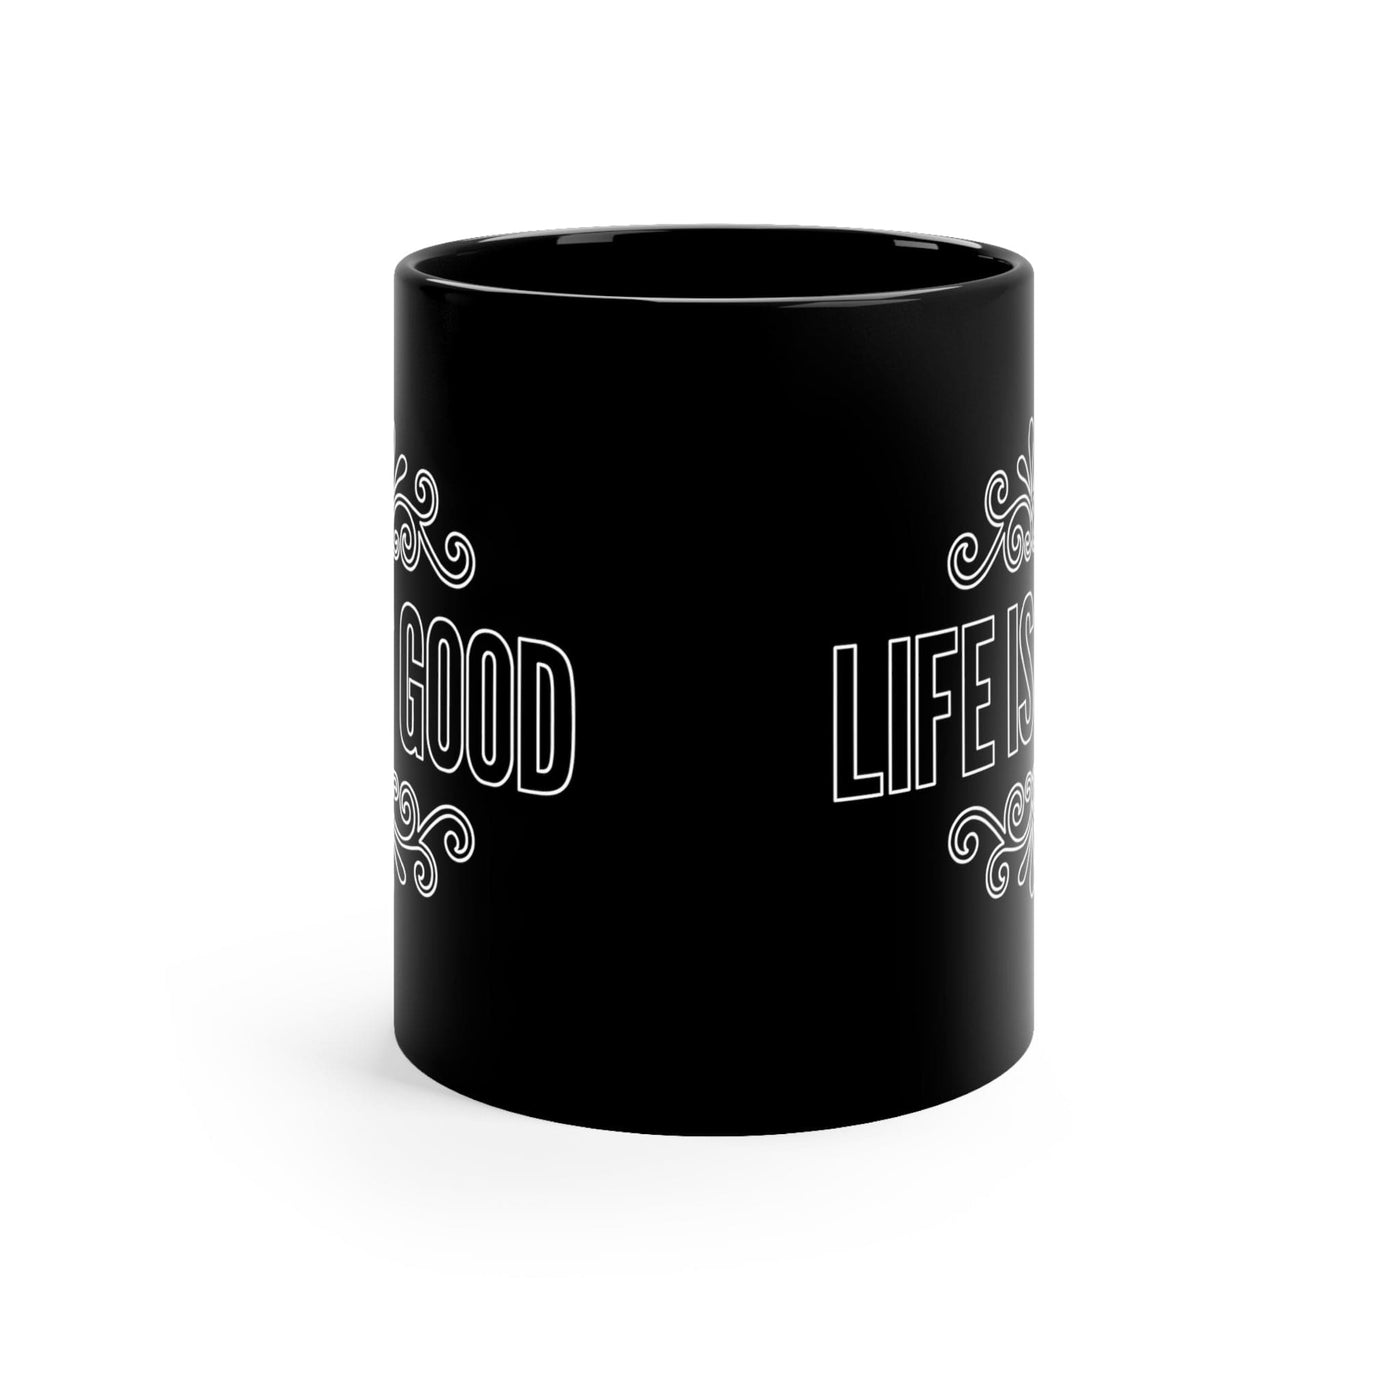 Black Ceramic Mug - 11oz Life Is Good Outline Graphic Illustration - Decorative